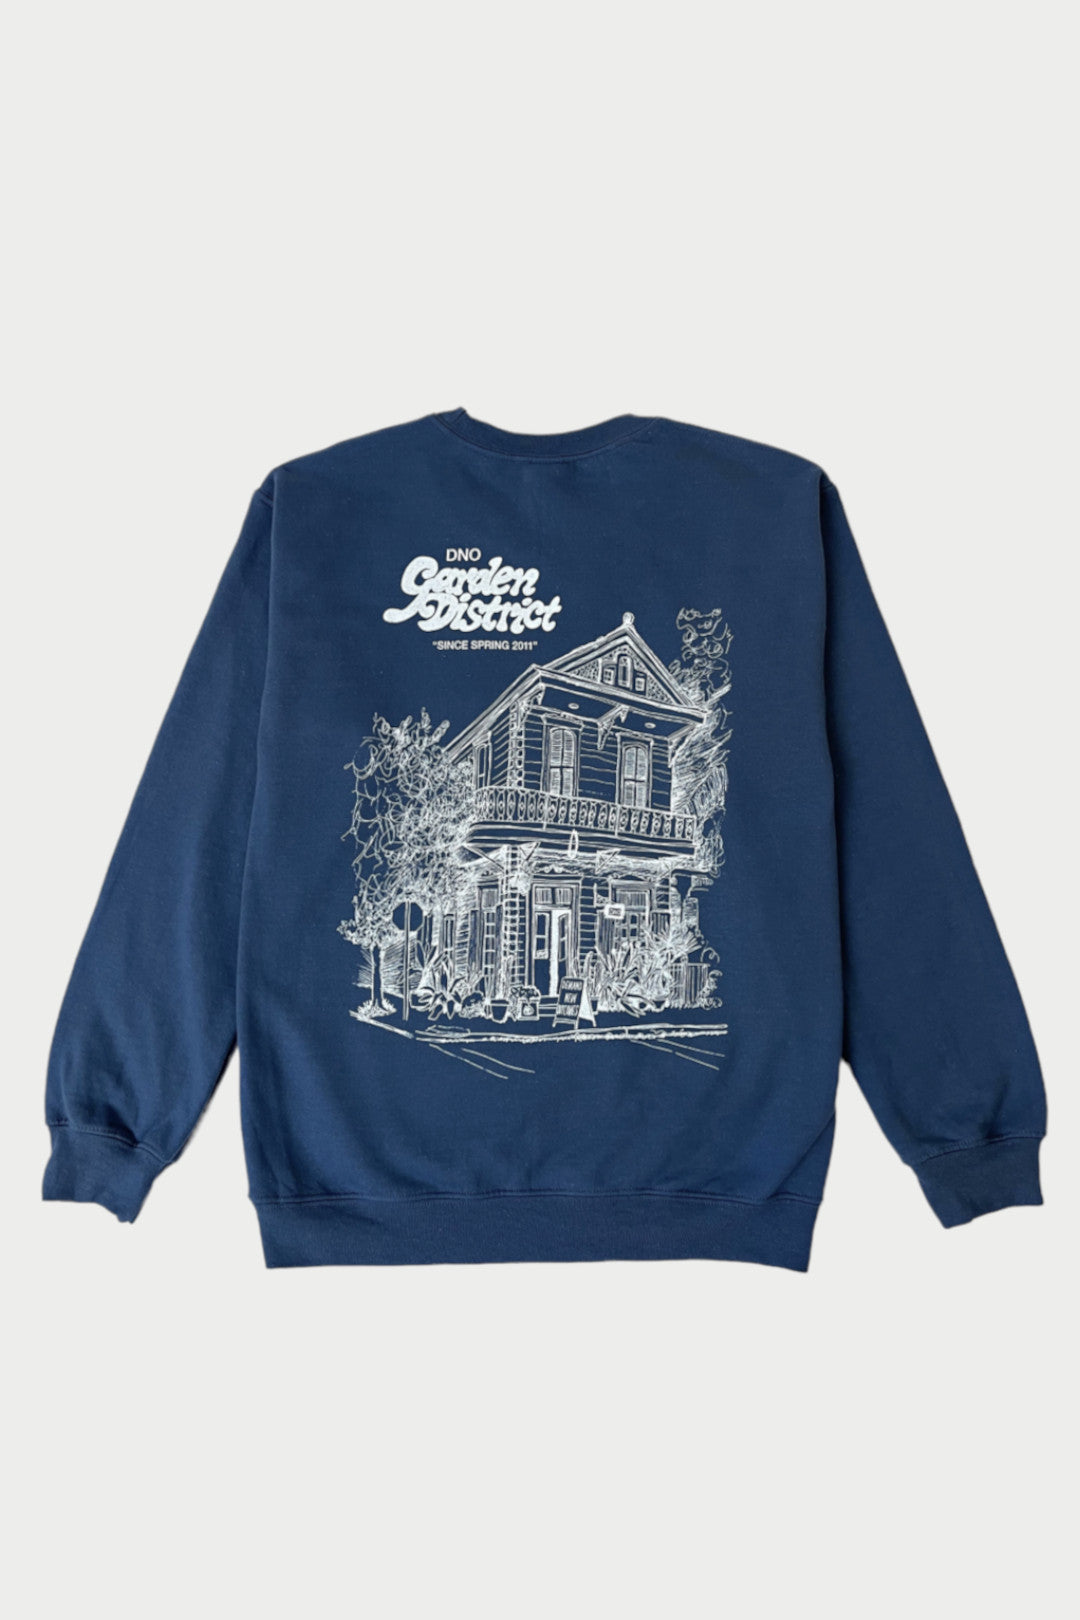 GD Shop Sweatshirt - Indigo